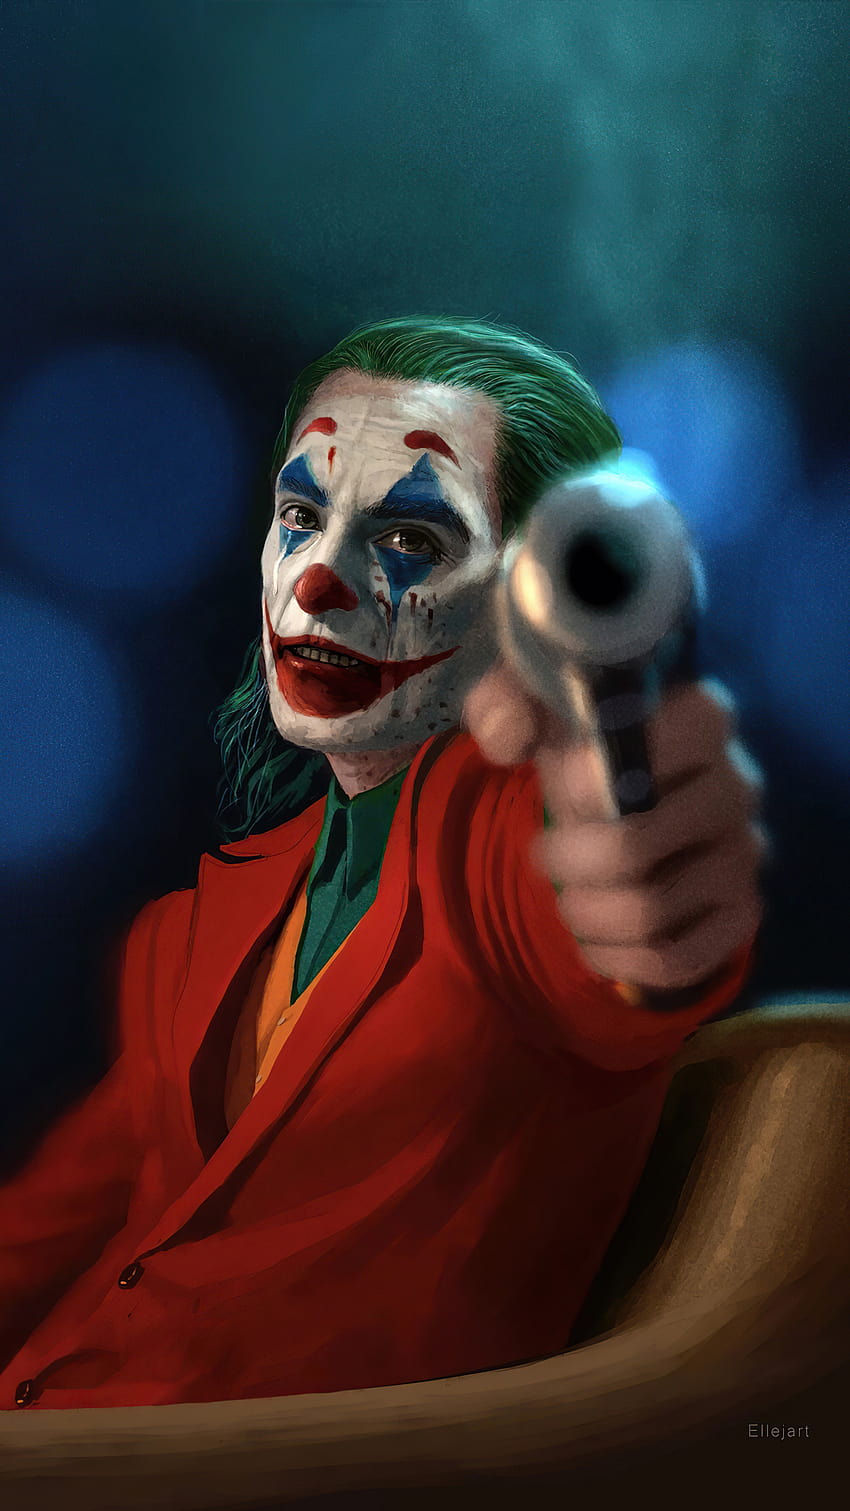 1080x1920 Joker con pistola 2020 Iphone 7,6s,6 Plus, Pixel xl, One Plus 3,3t,5, s y joker dp fondo de pantalla del teléfono